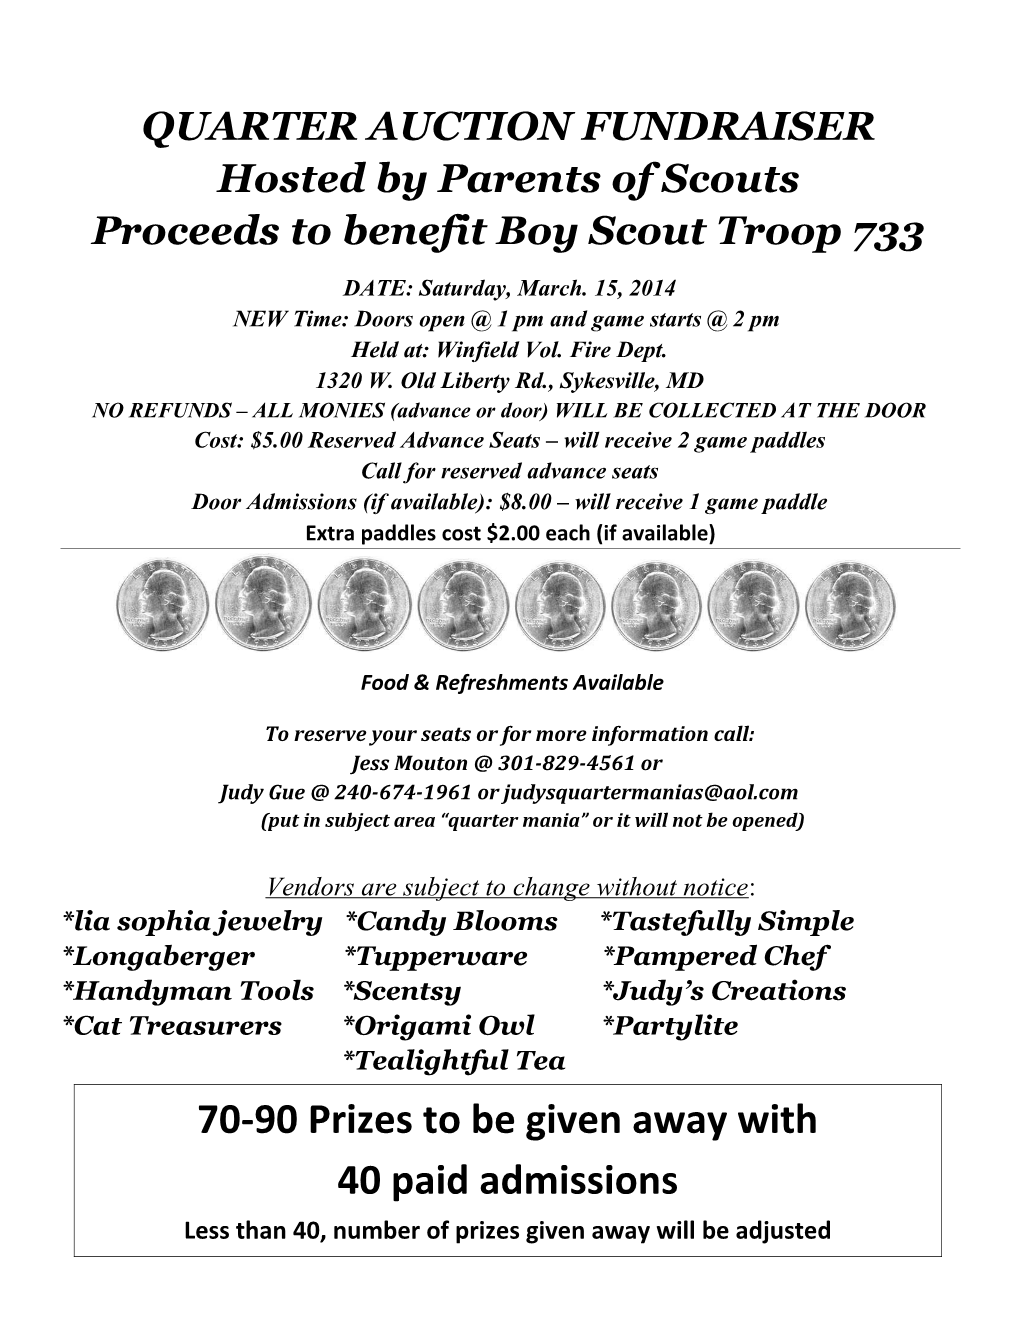 Proceeds to Benefit Boy Scout Troop 733